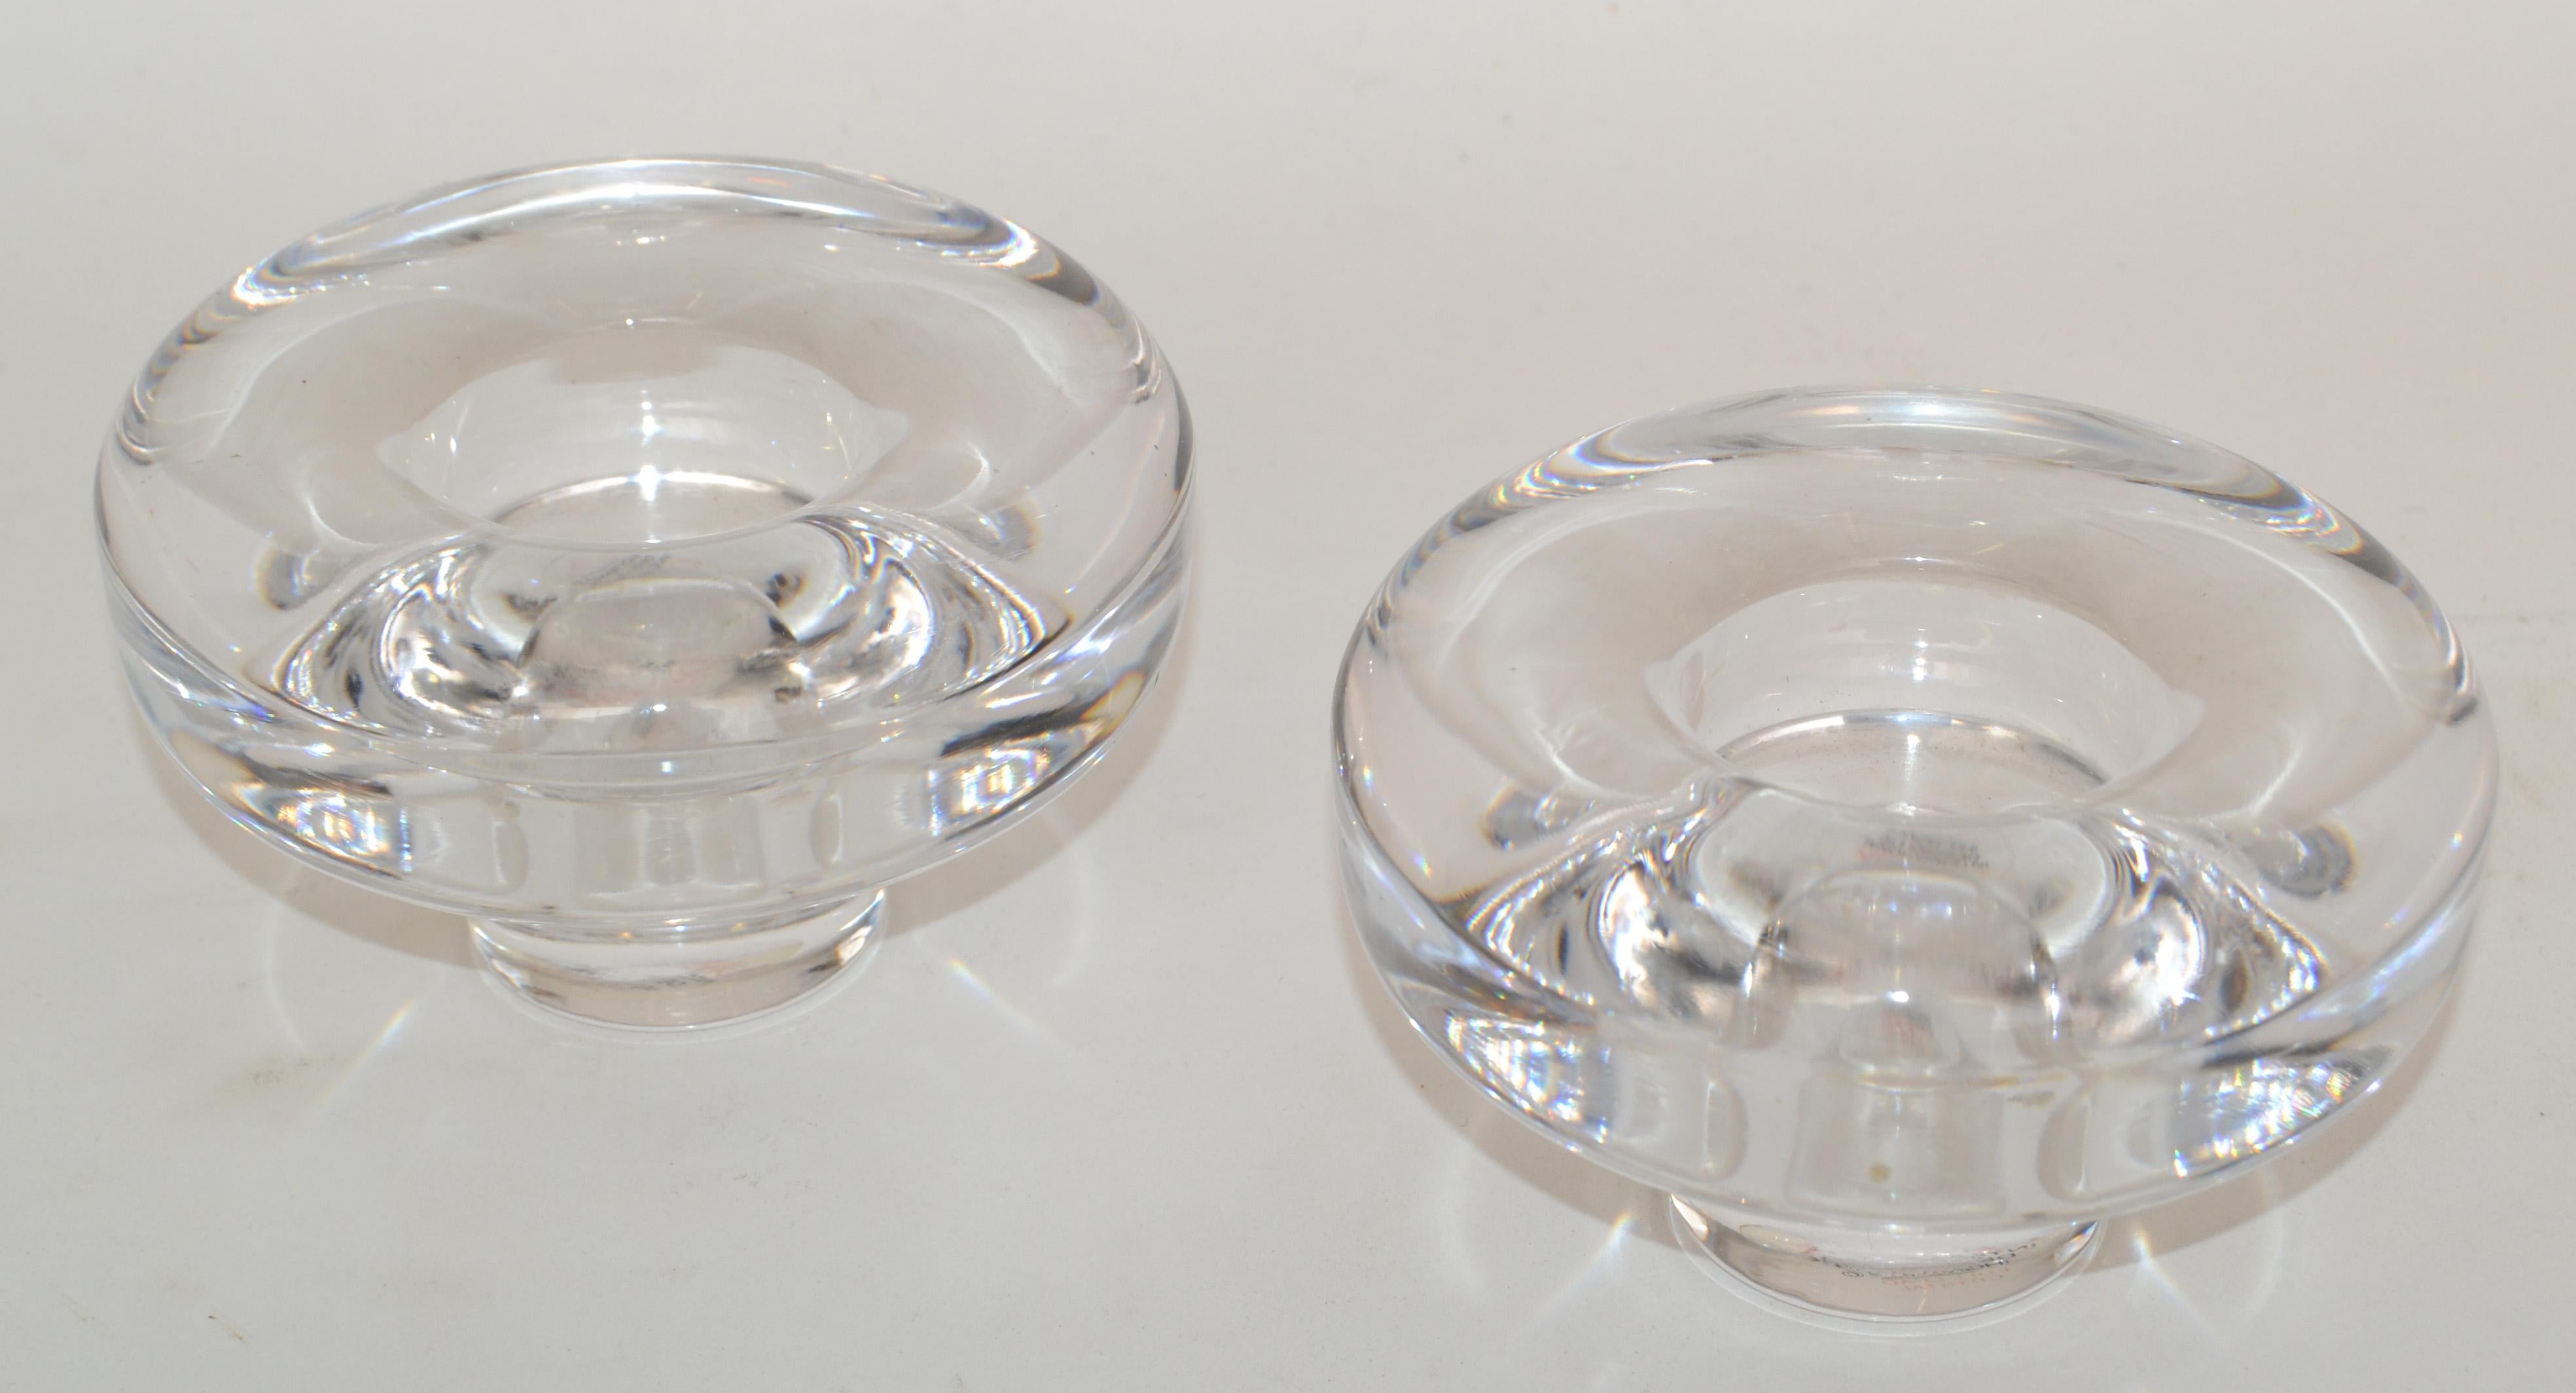 Scandinavian Modern Dansk International Pair of Lead Crystal Glass Candle Holder For Sale 3